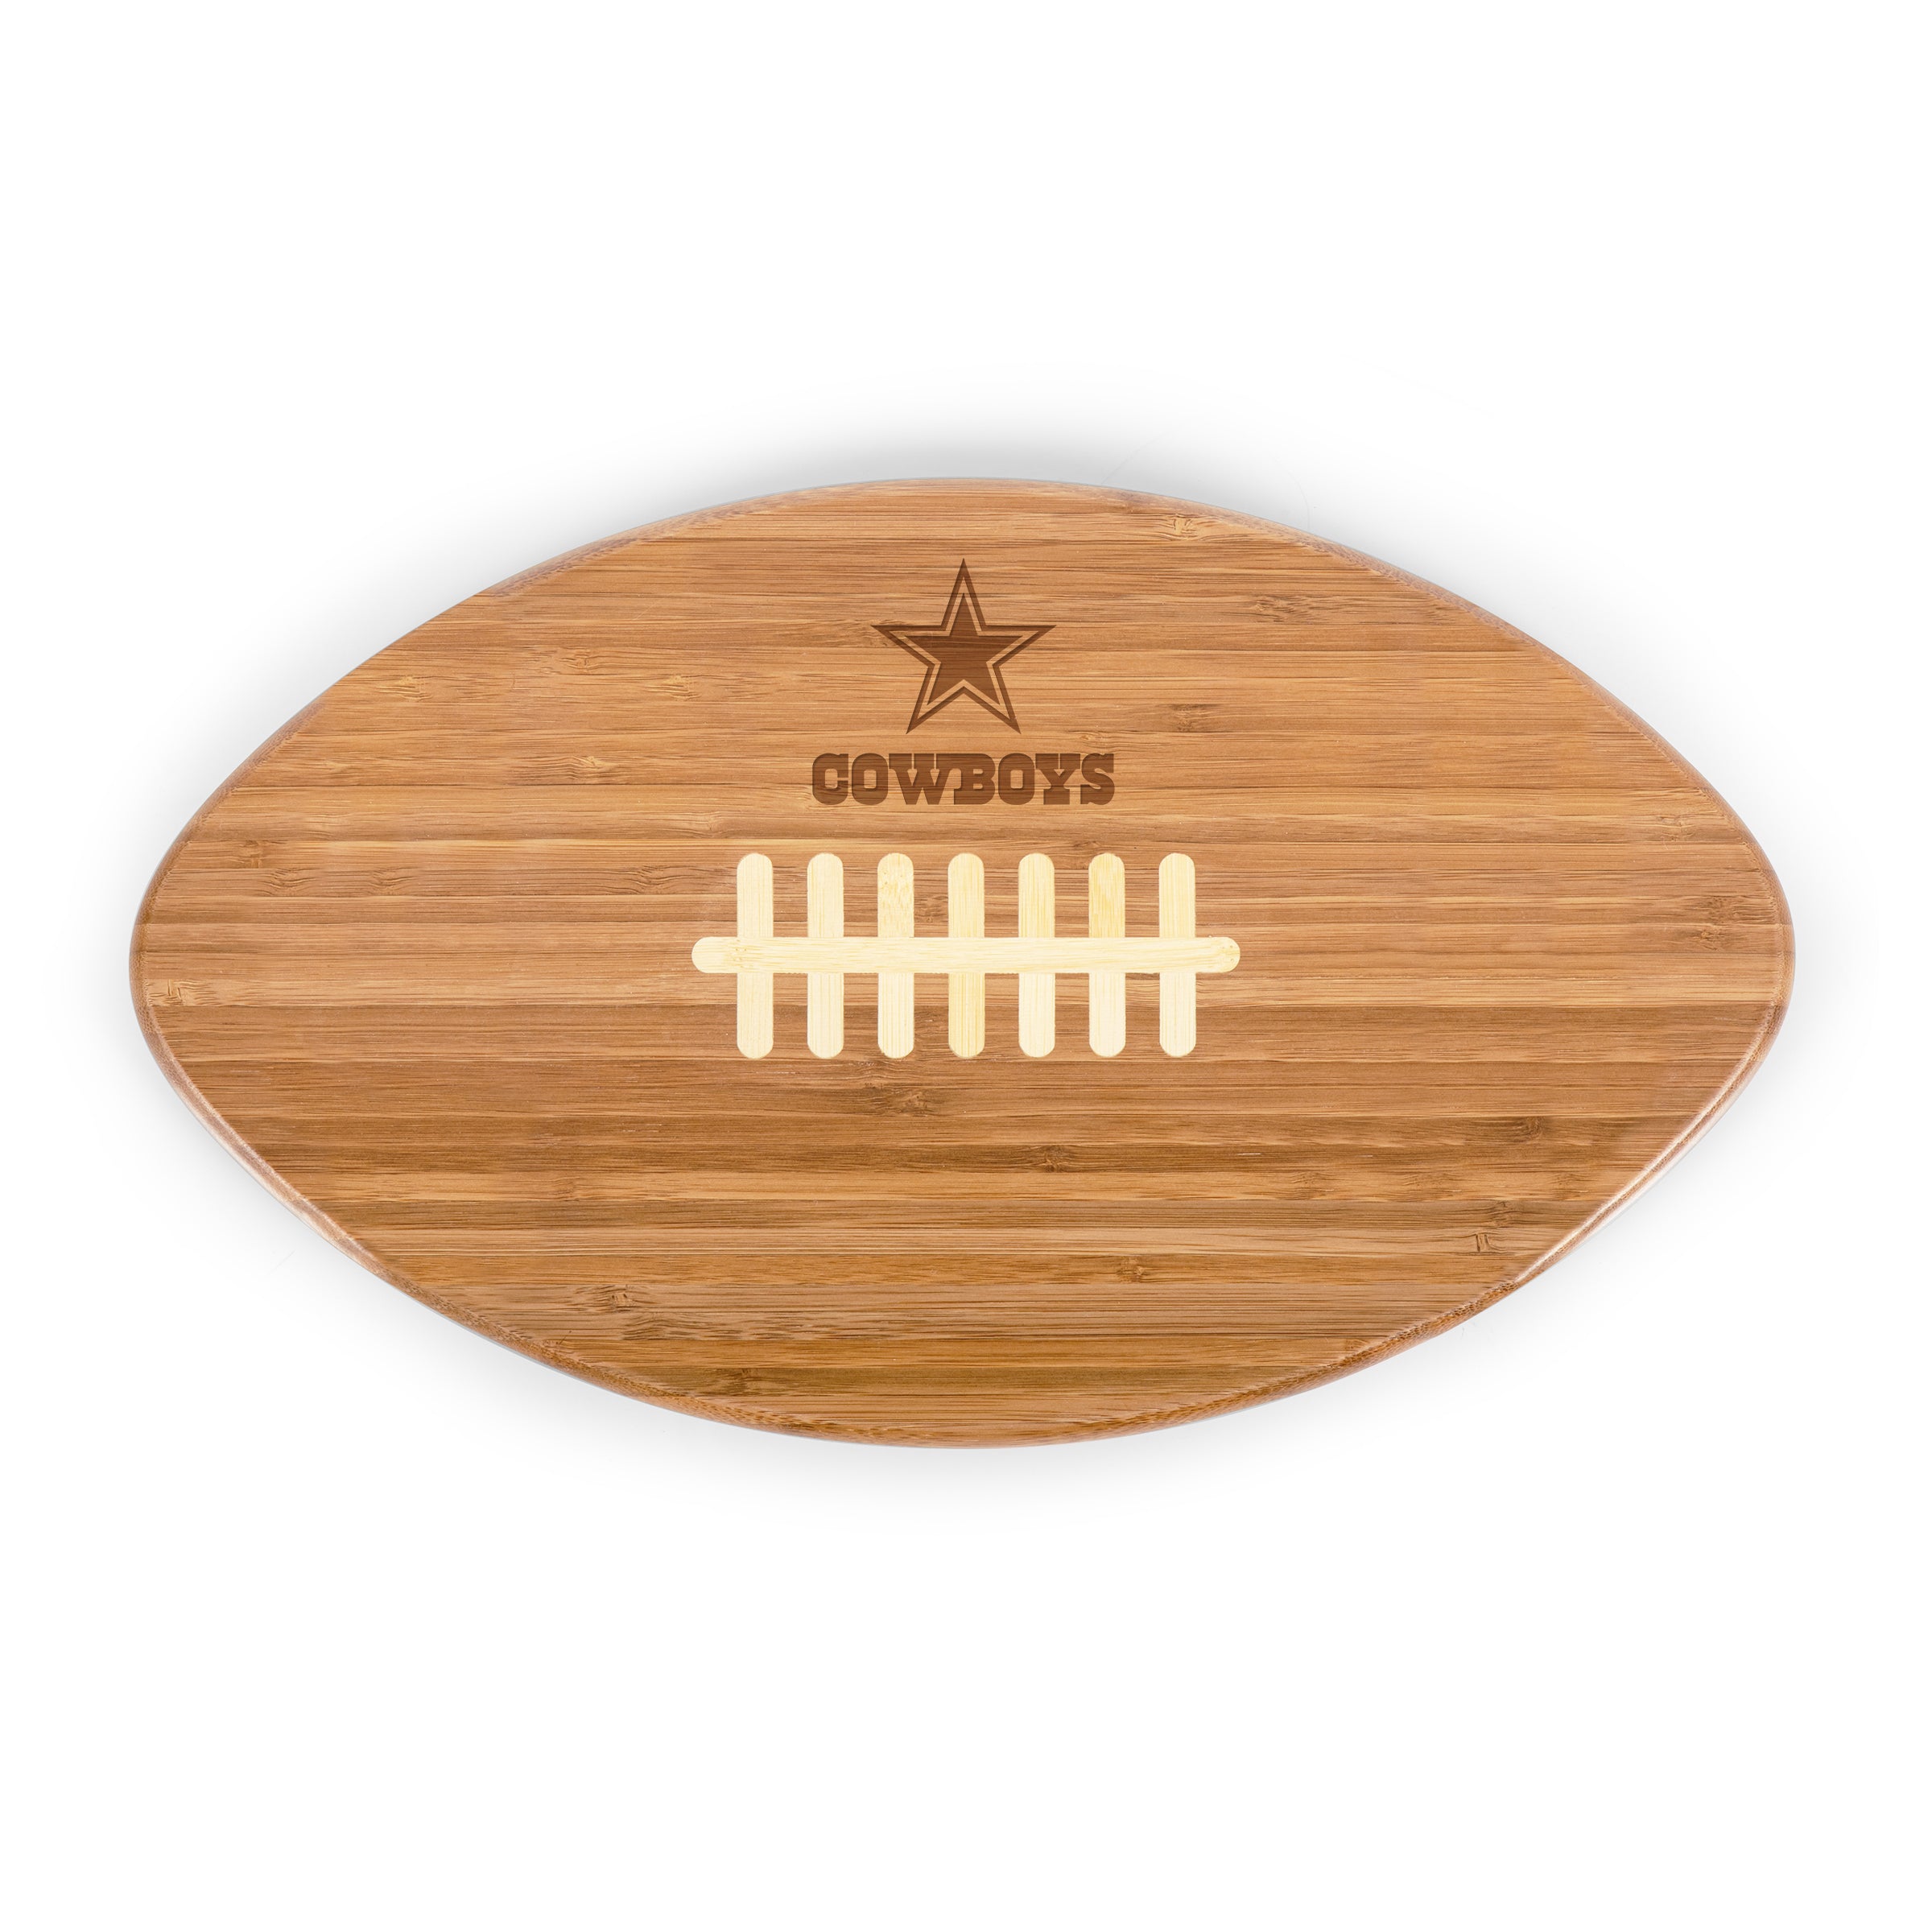 Dallas Cowboys - Touchdown! Football Cutting Board & Serving Tray